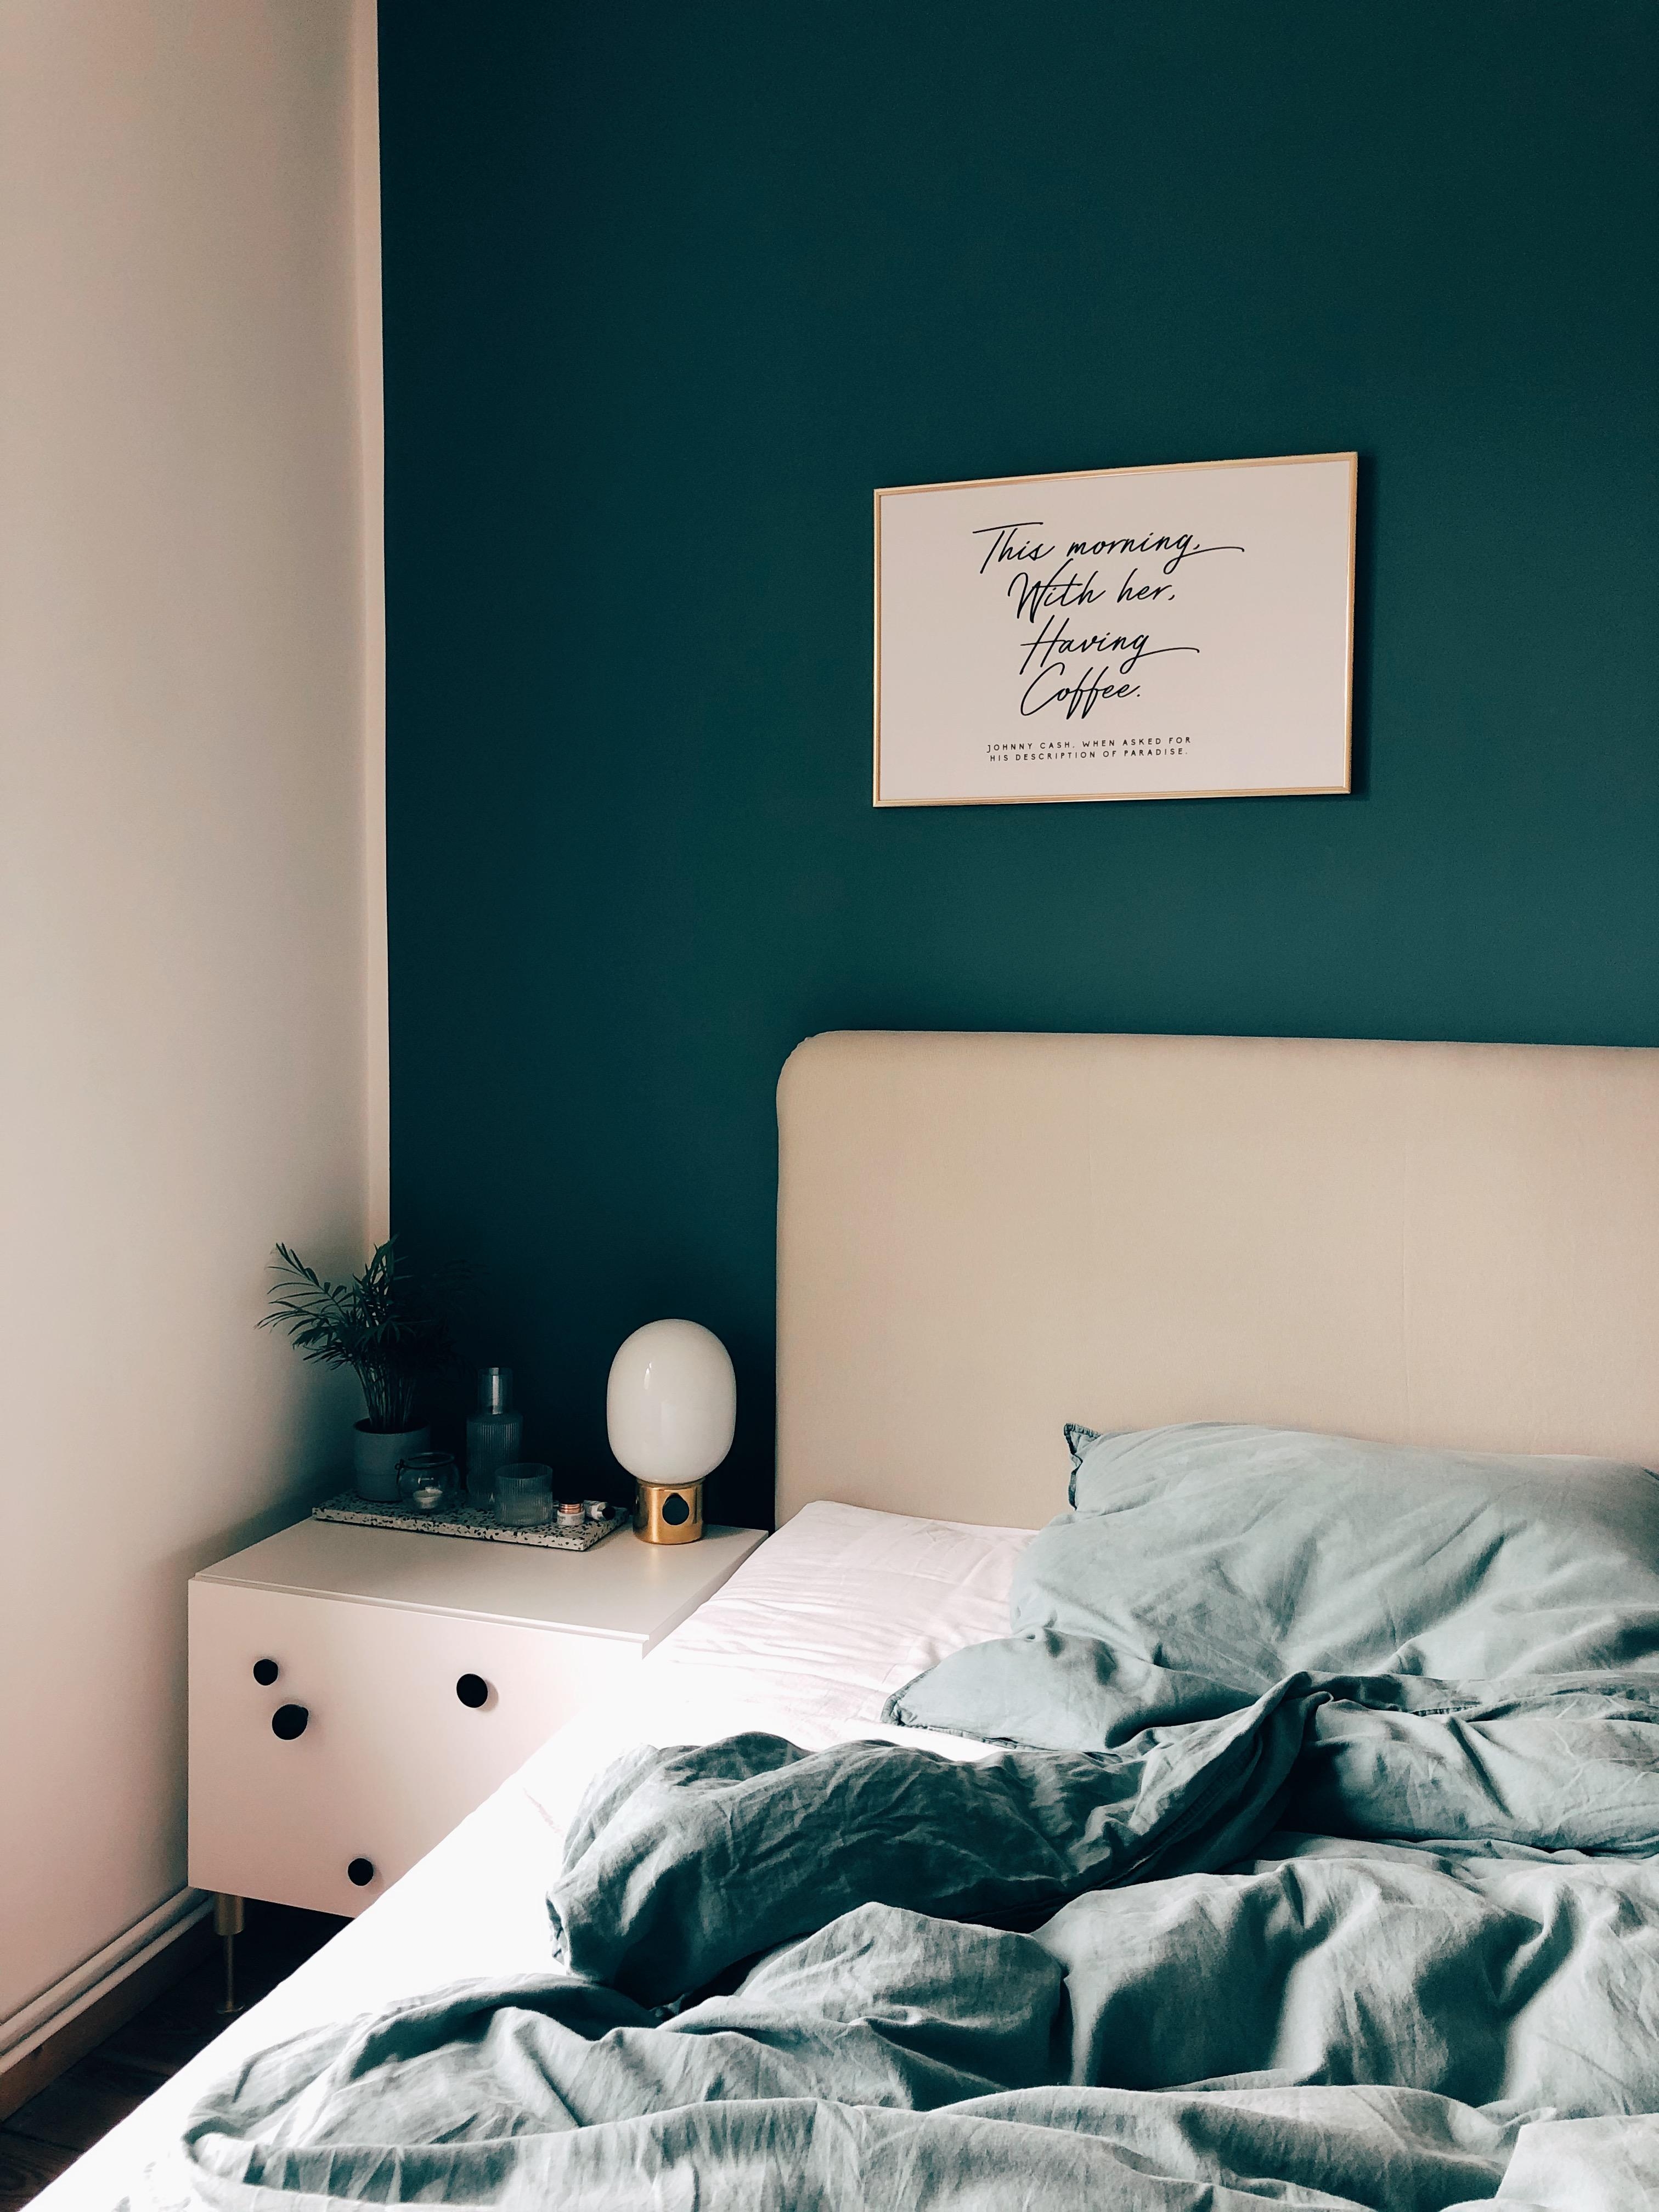 Noch 5 Minuten...
#schlafzimmer #wandfarbe #grün #wallcolour #bedroom #cozy